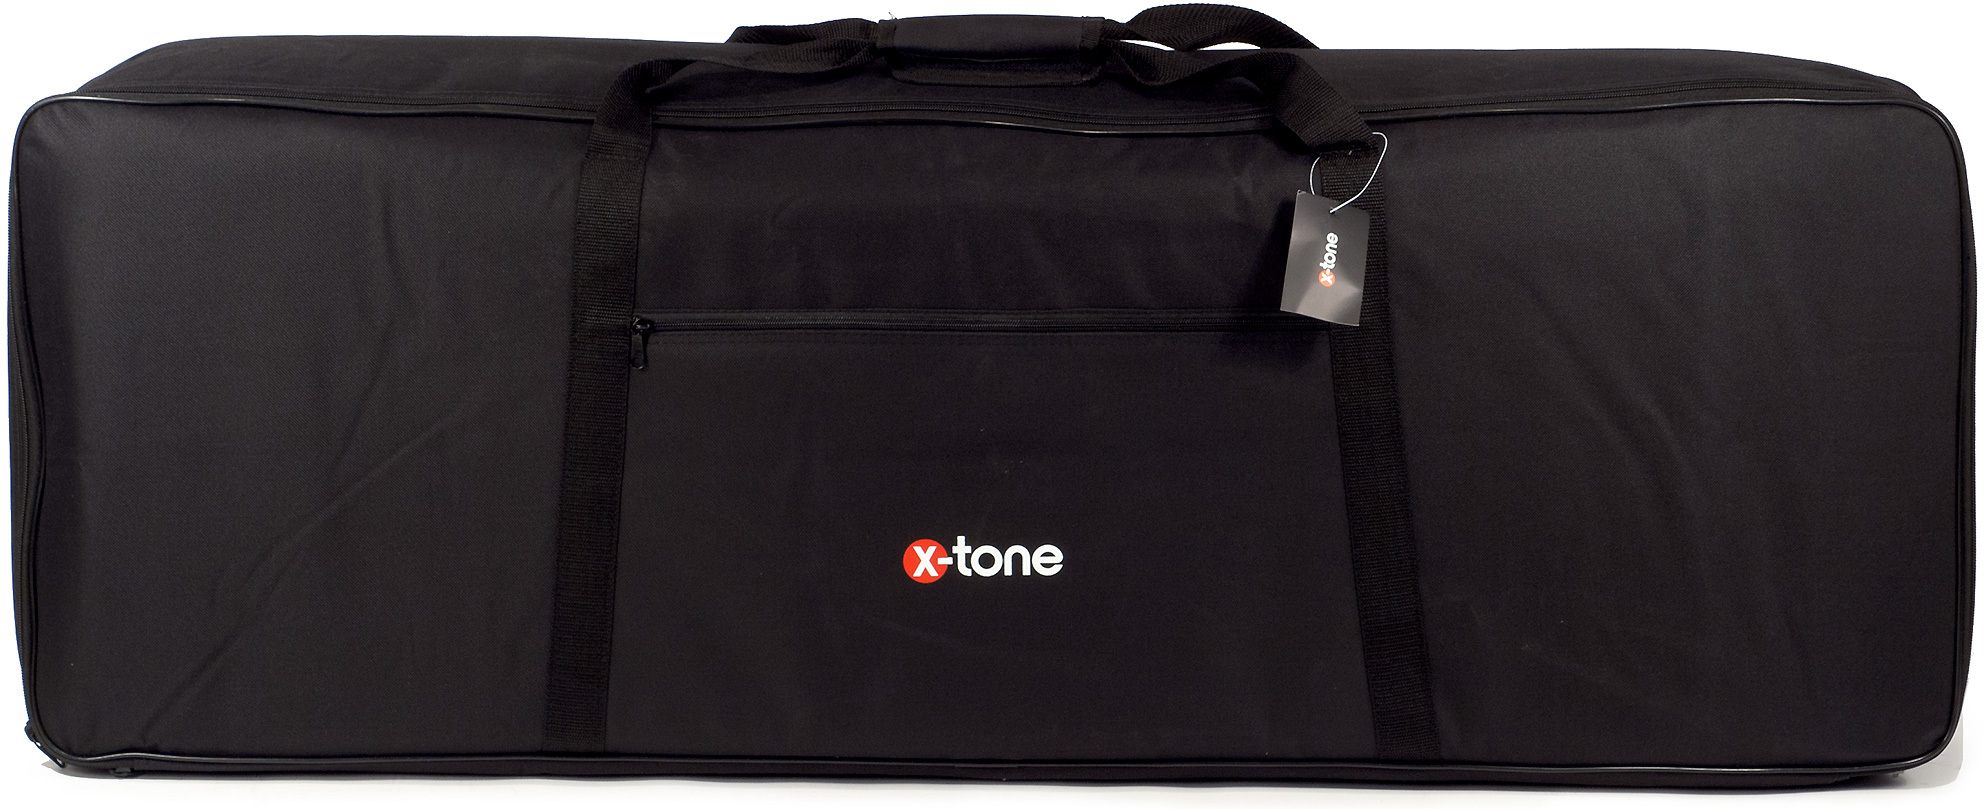 X-tone 2102 Pour Clavier 88 Notes En 10 Mm Black - Tasche für Keyboard - Main picture